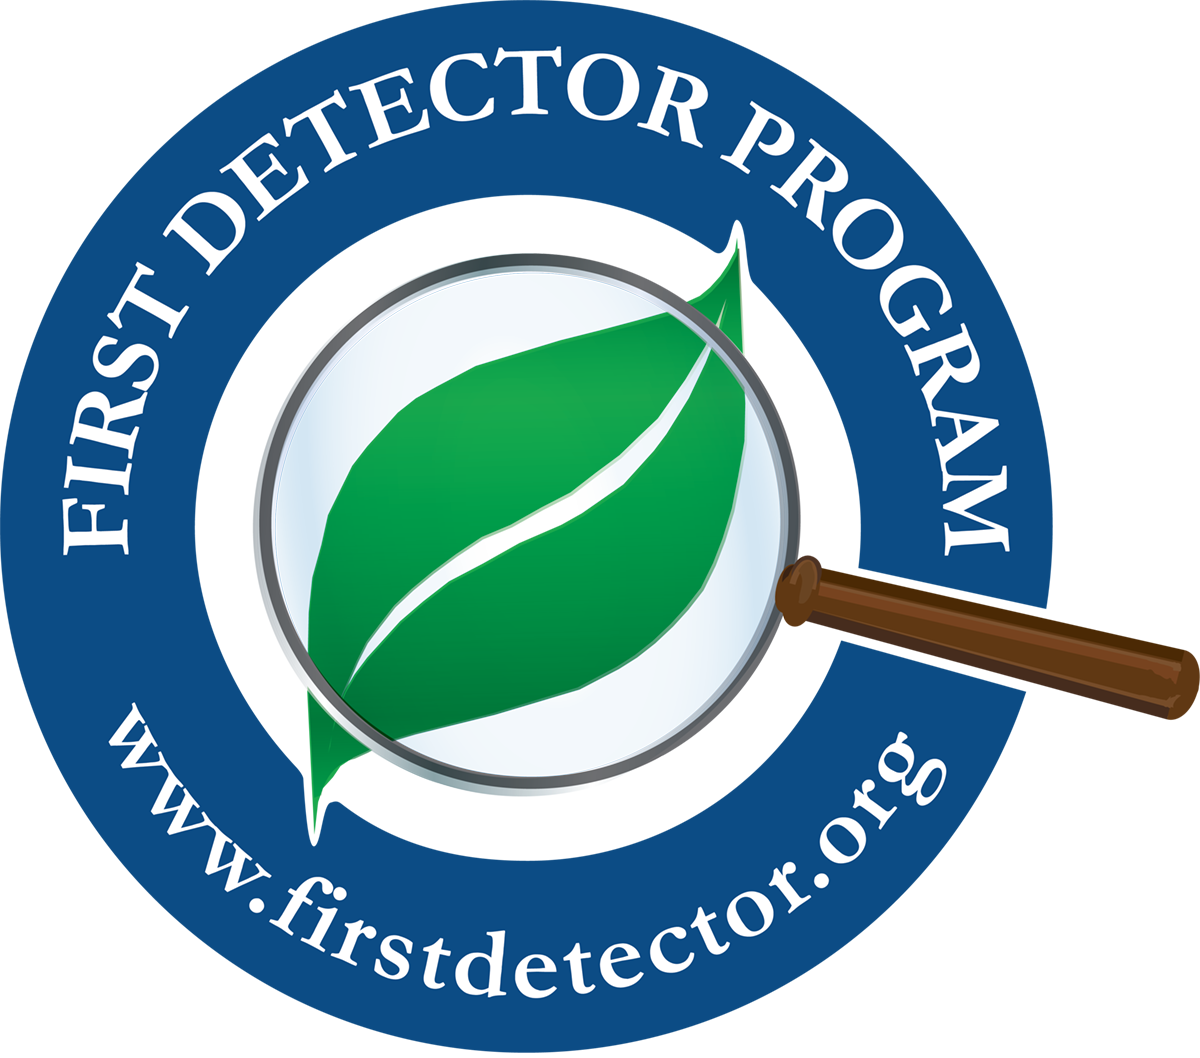 First Detector Program logo